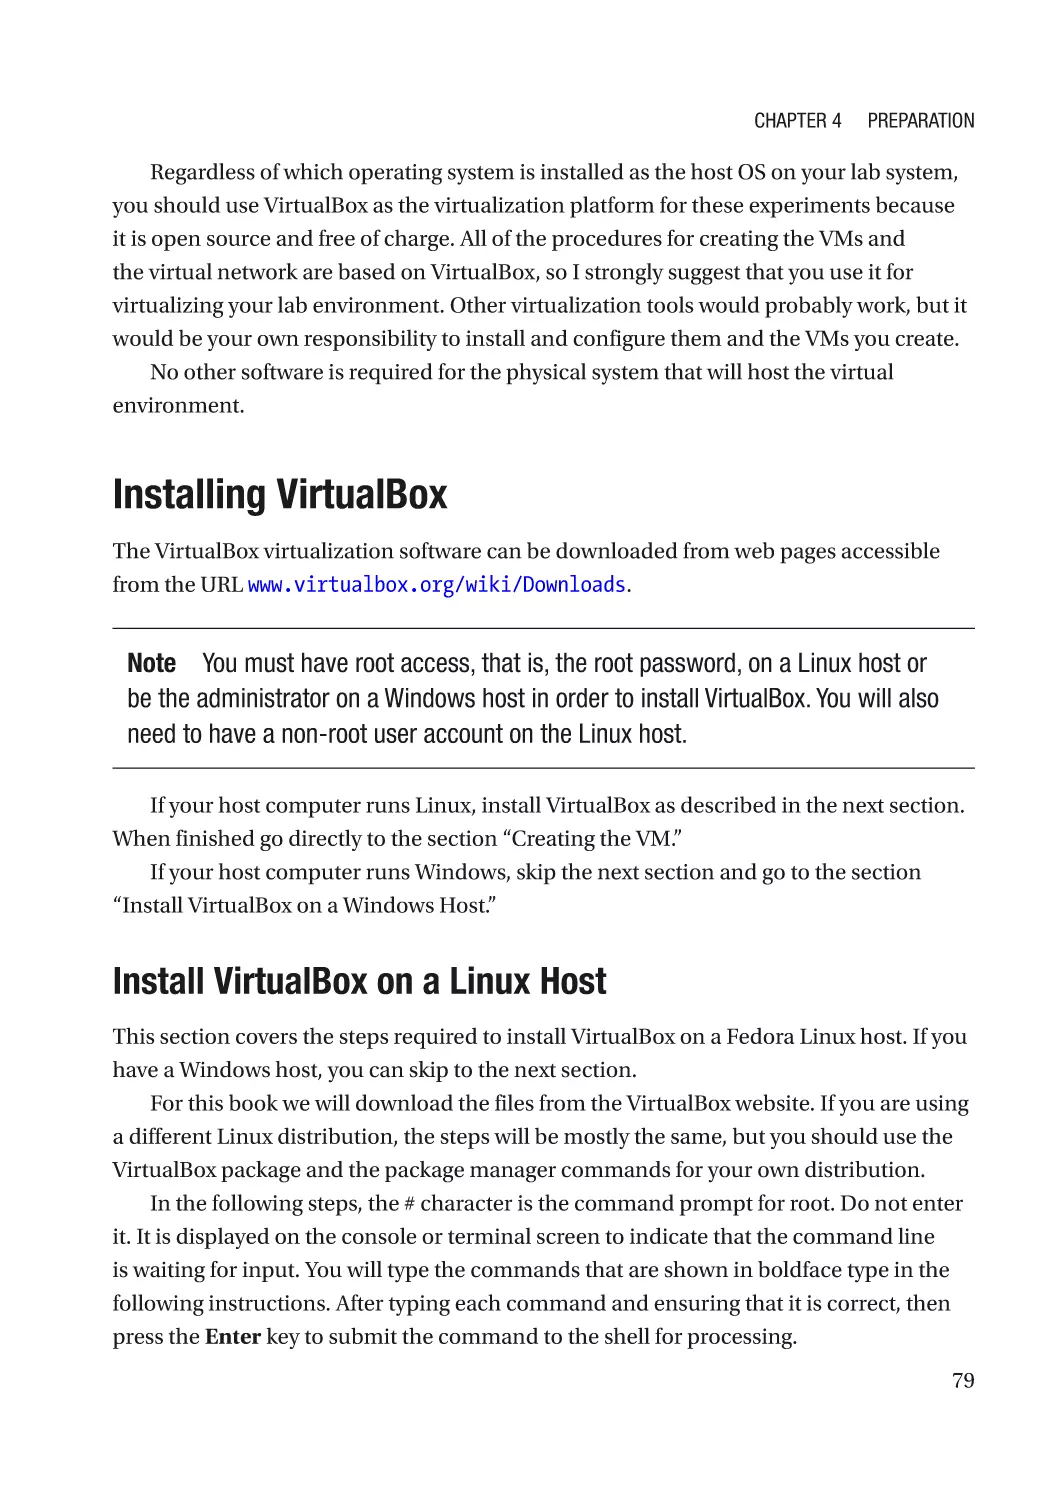 Installing VirtualBox
Install VirtualBox on a Linux Host